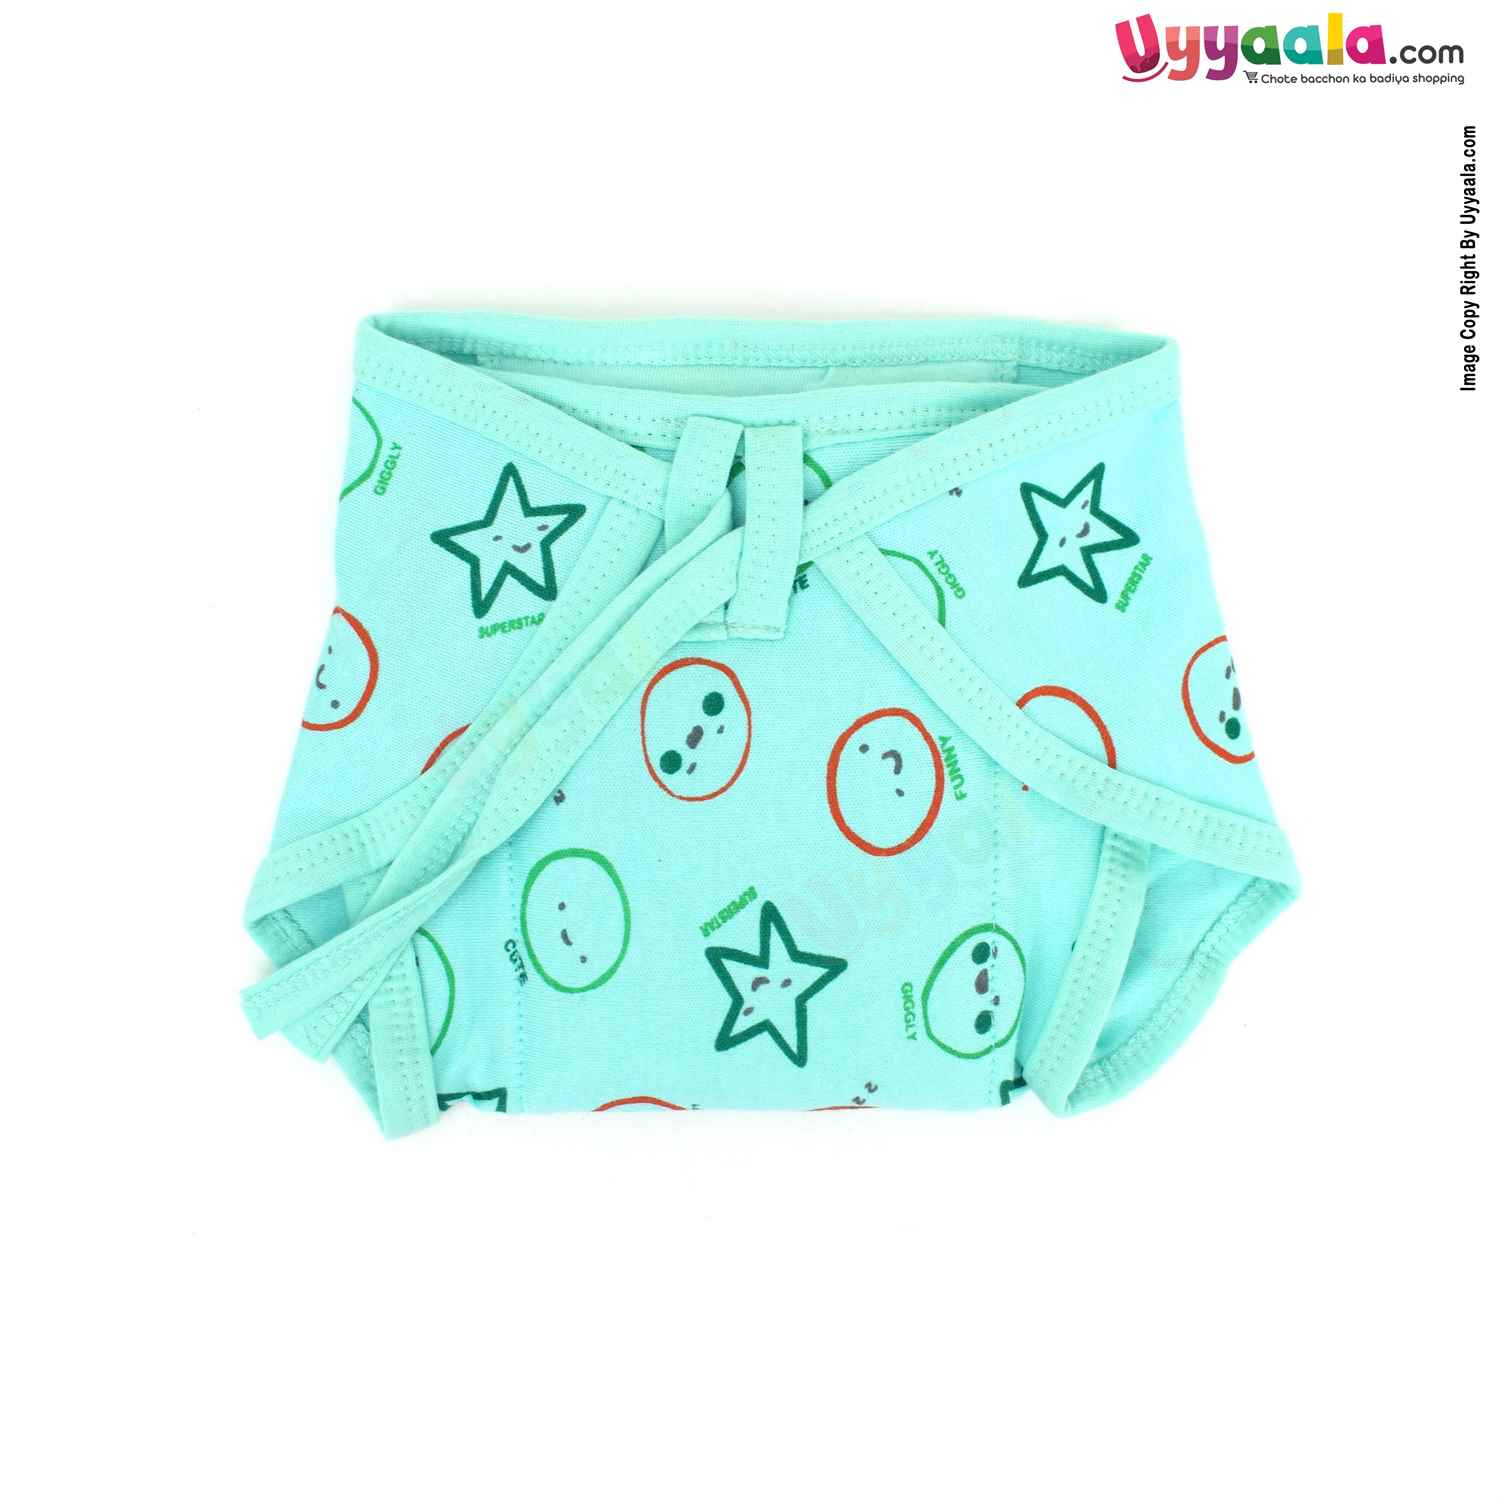 COZYCARE Washable Diapers Hosiery Tying Mode Emoji Print Blue, Green & Yellow 3P Set (M)